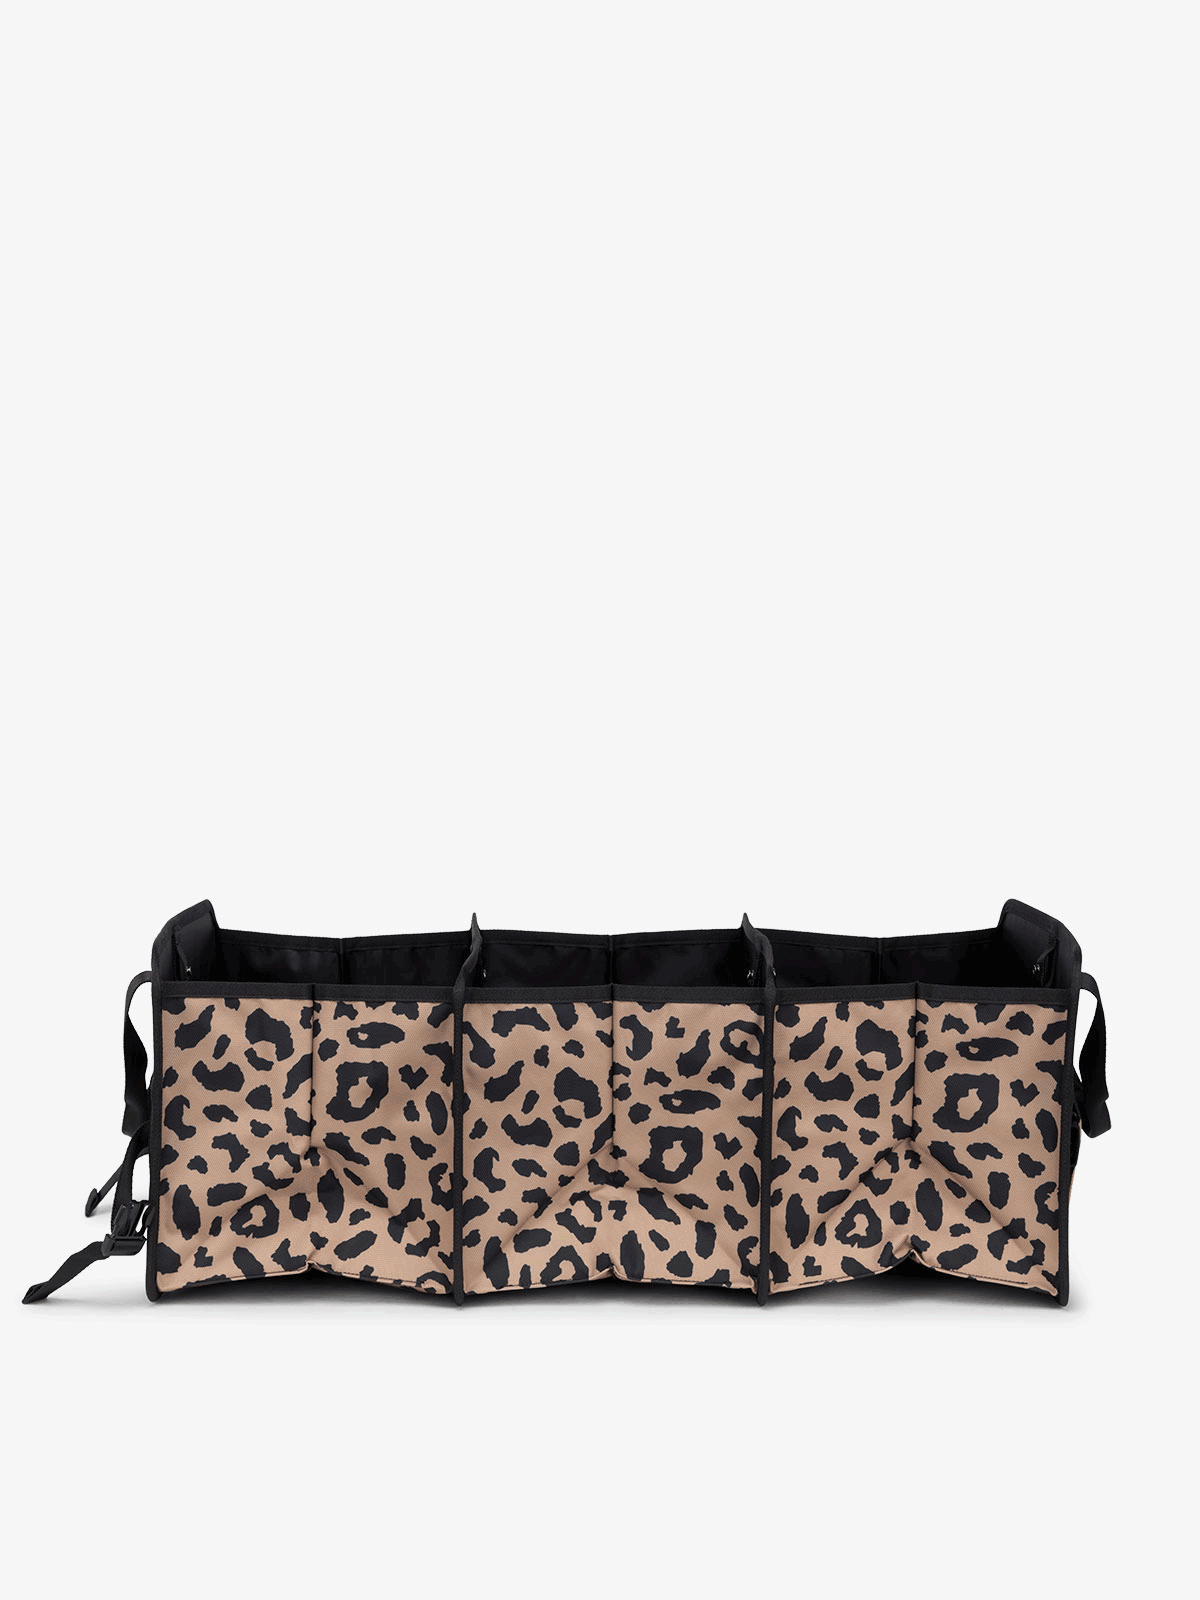 foldable cheetah print trunk organizer